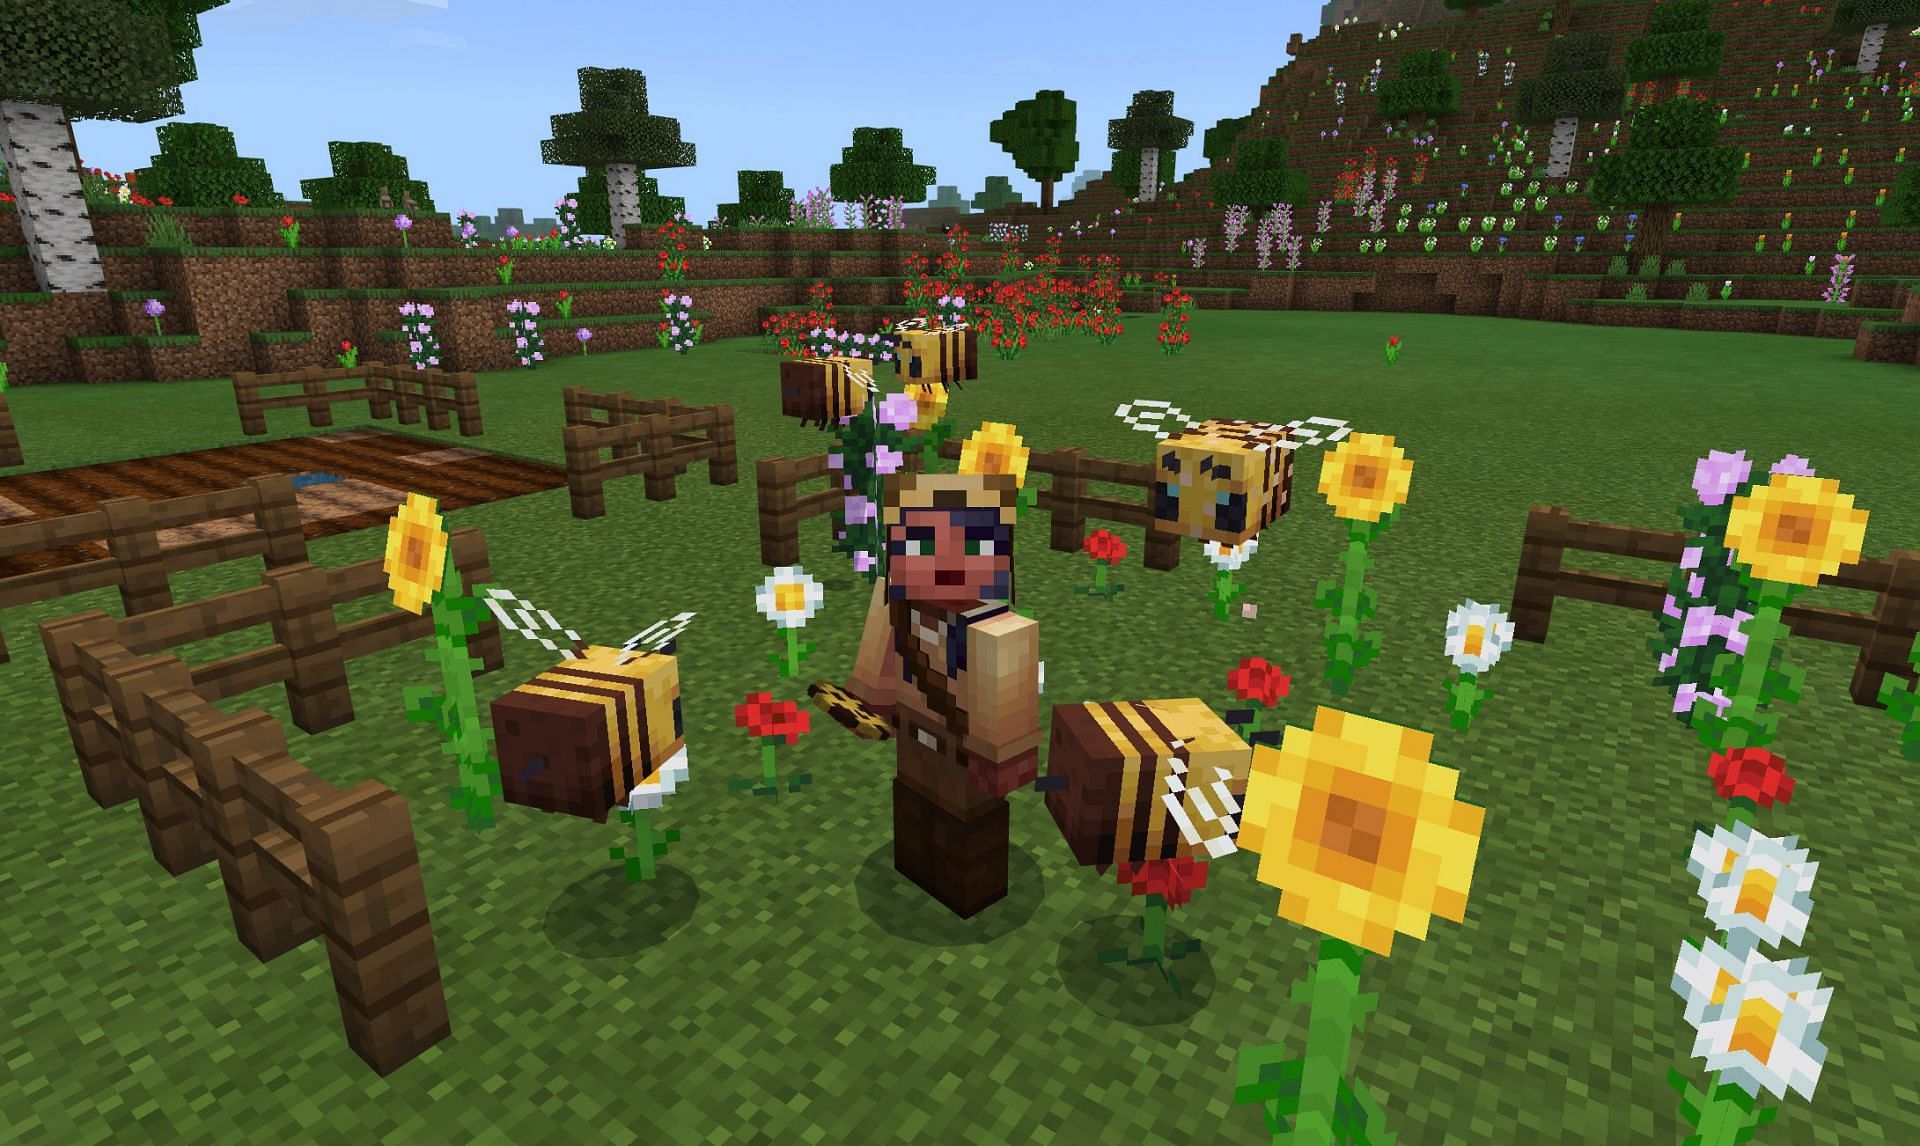 Bee pollination in Minecraft (Image via Minecraft Education Edition)